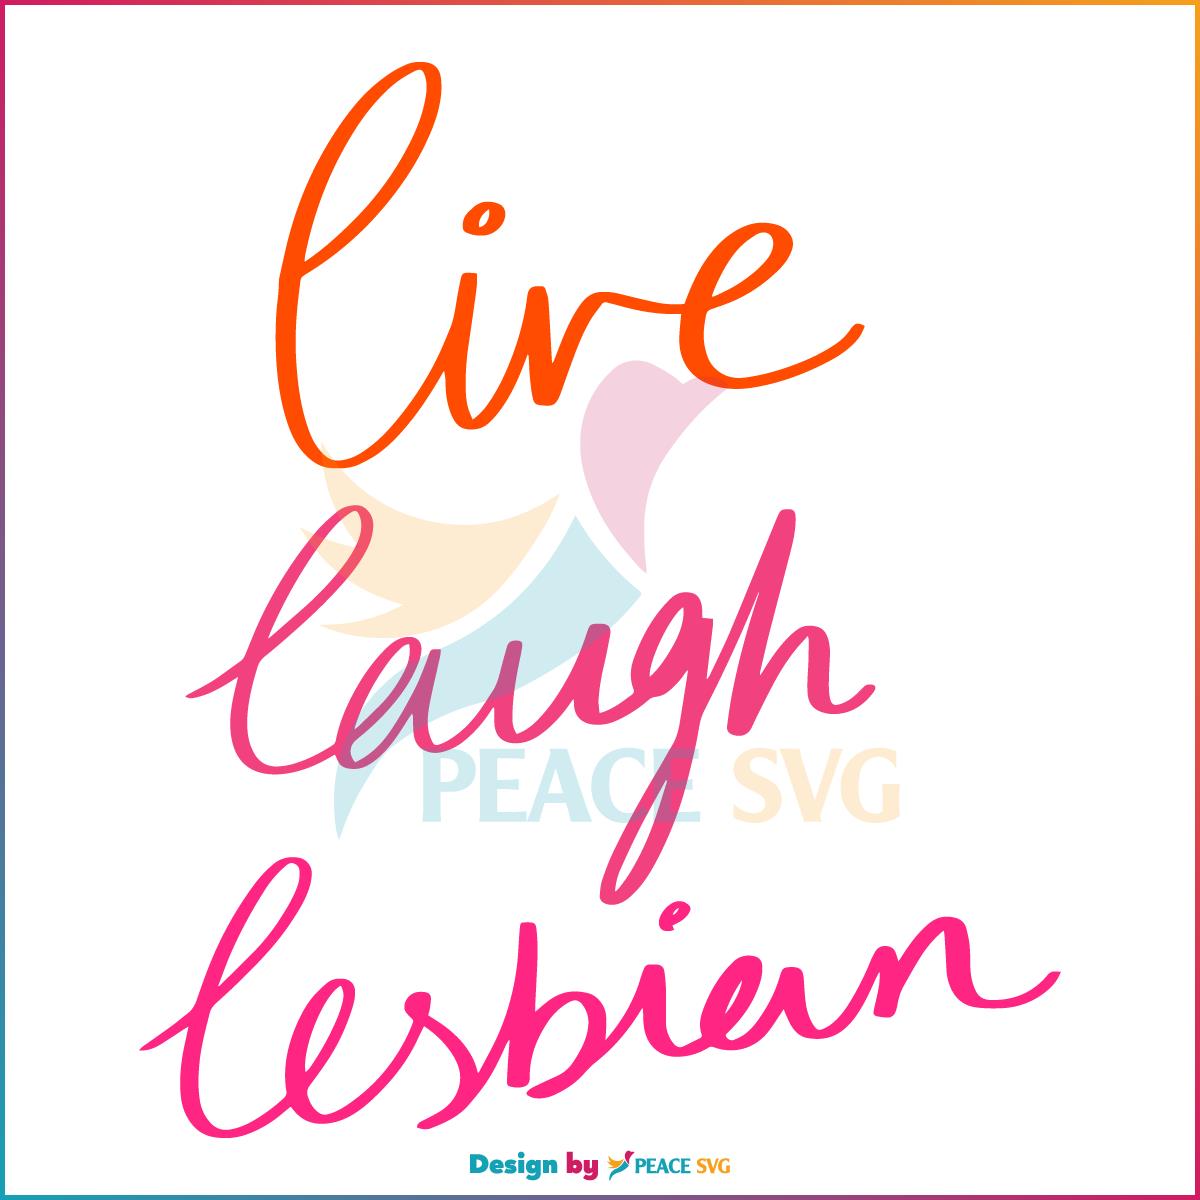 Live Laugh Lesbian Happy LGBTQ Month Lesbian Pride SVG